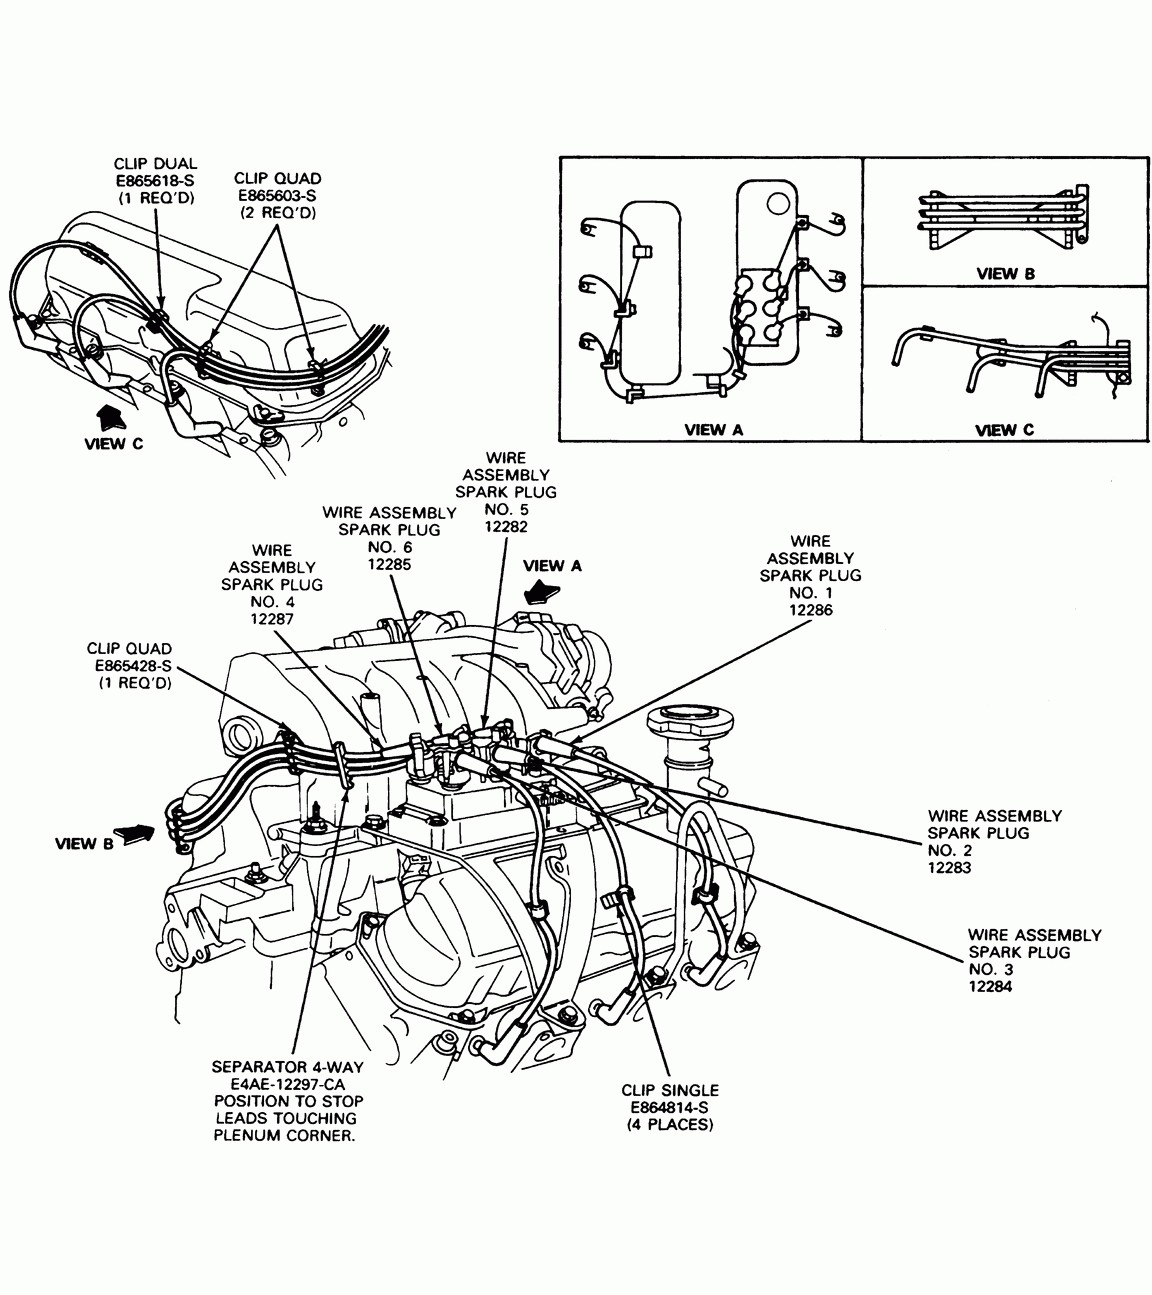 Download [Diagram] Ford 4 6 Plug Wire Diagram Full Version